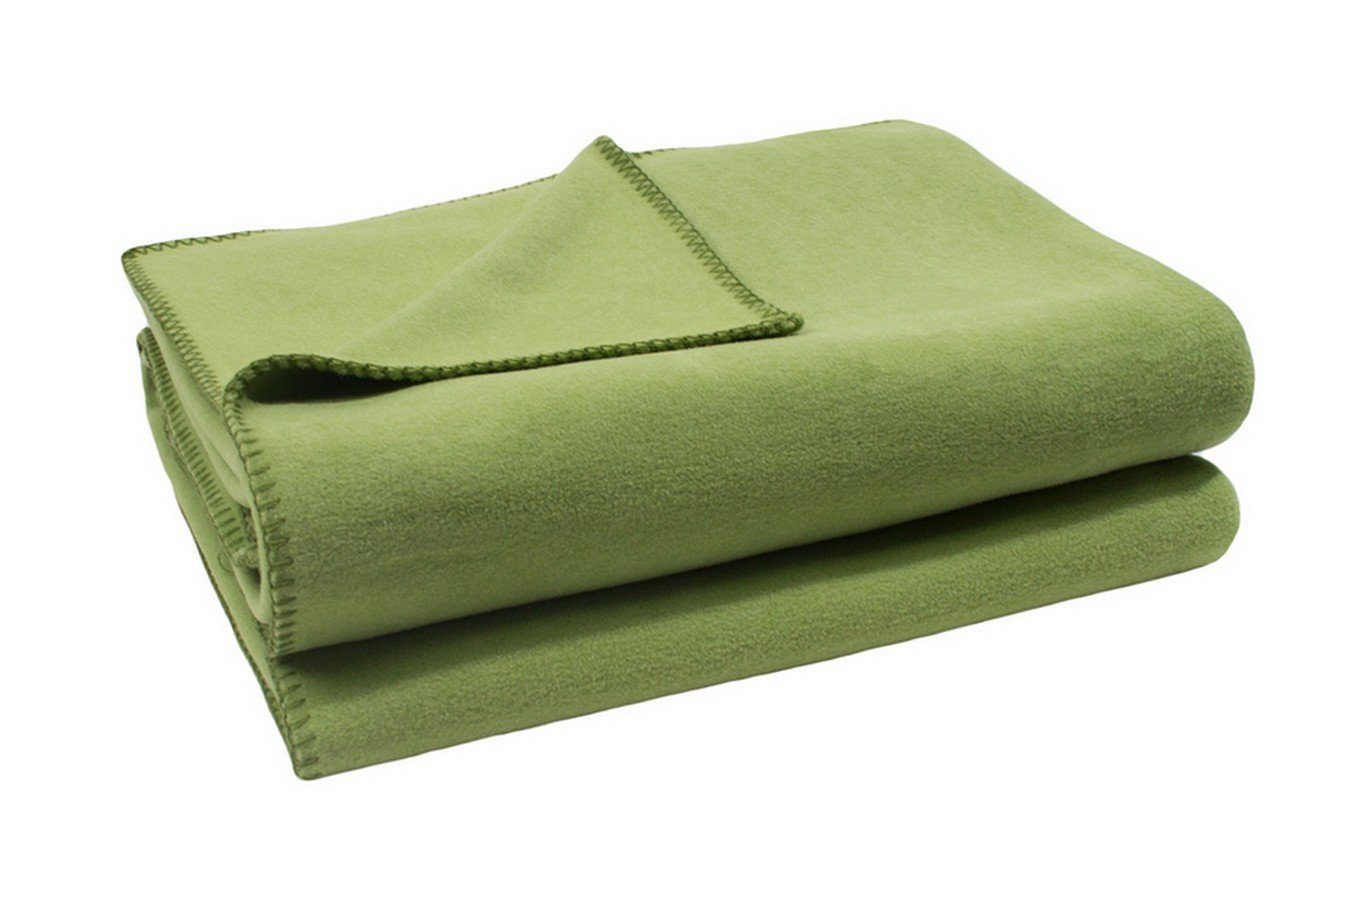 Wohndecke Soft-Fleece Decke 160 x 200 cm grün, daslagerhaus living